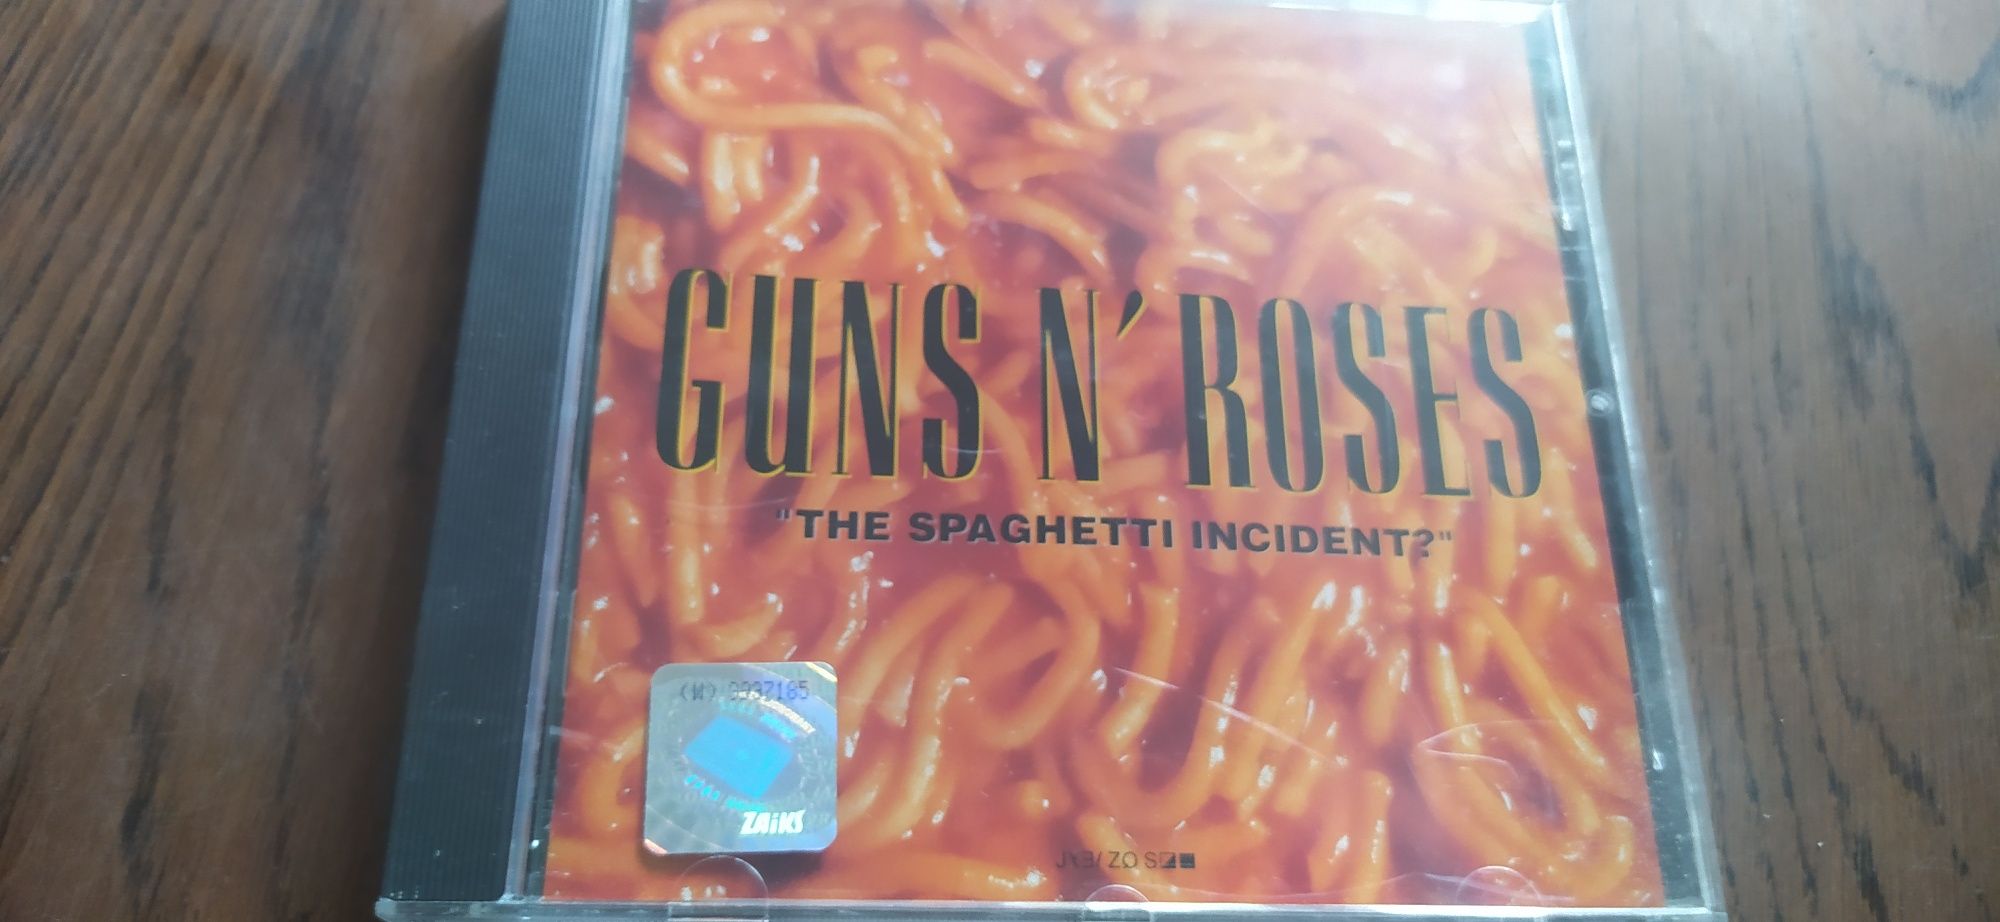 Guns n' roses The Spaghetti Incydent? CD